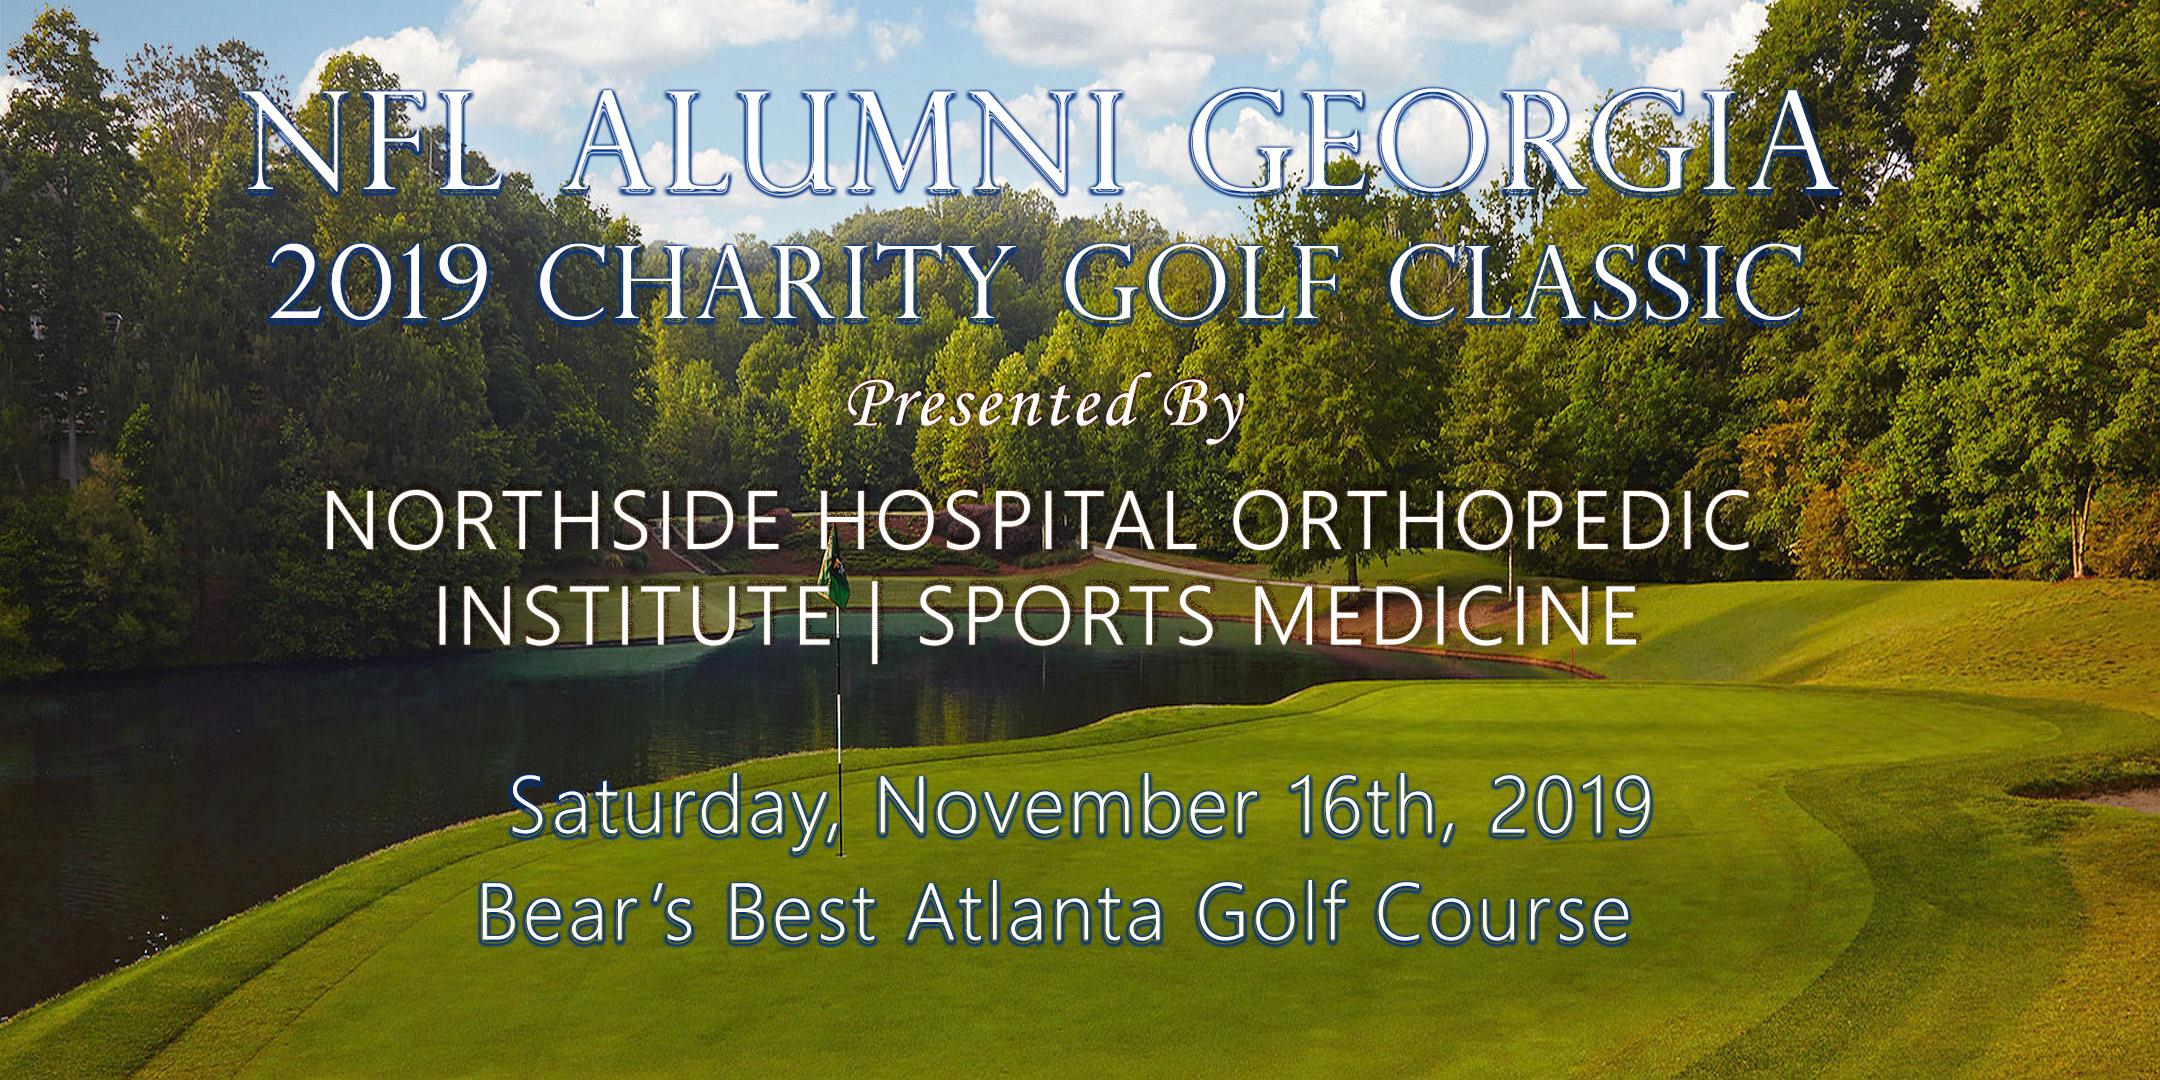 NFL Alumni Georgia 2019 Charity Golf Classic